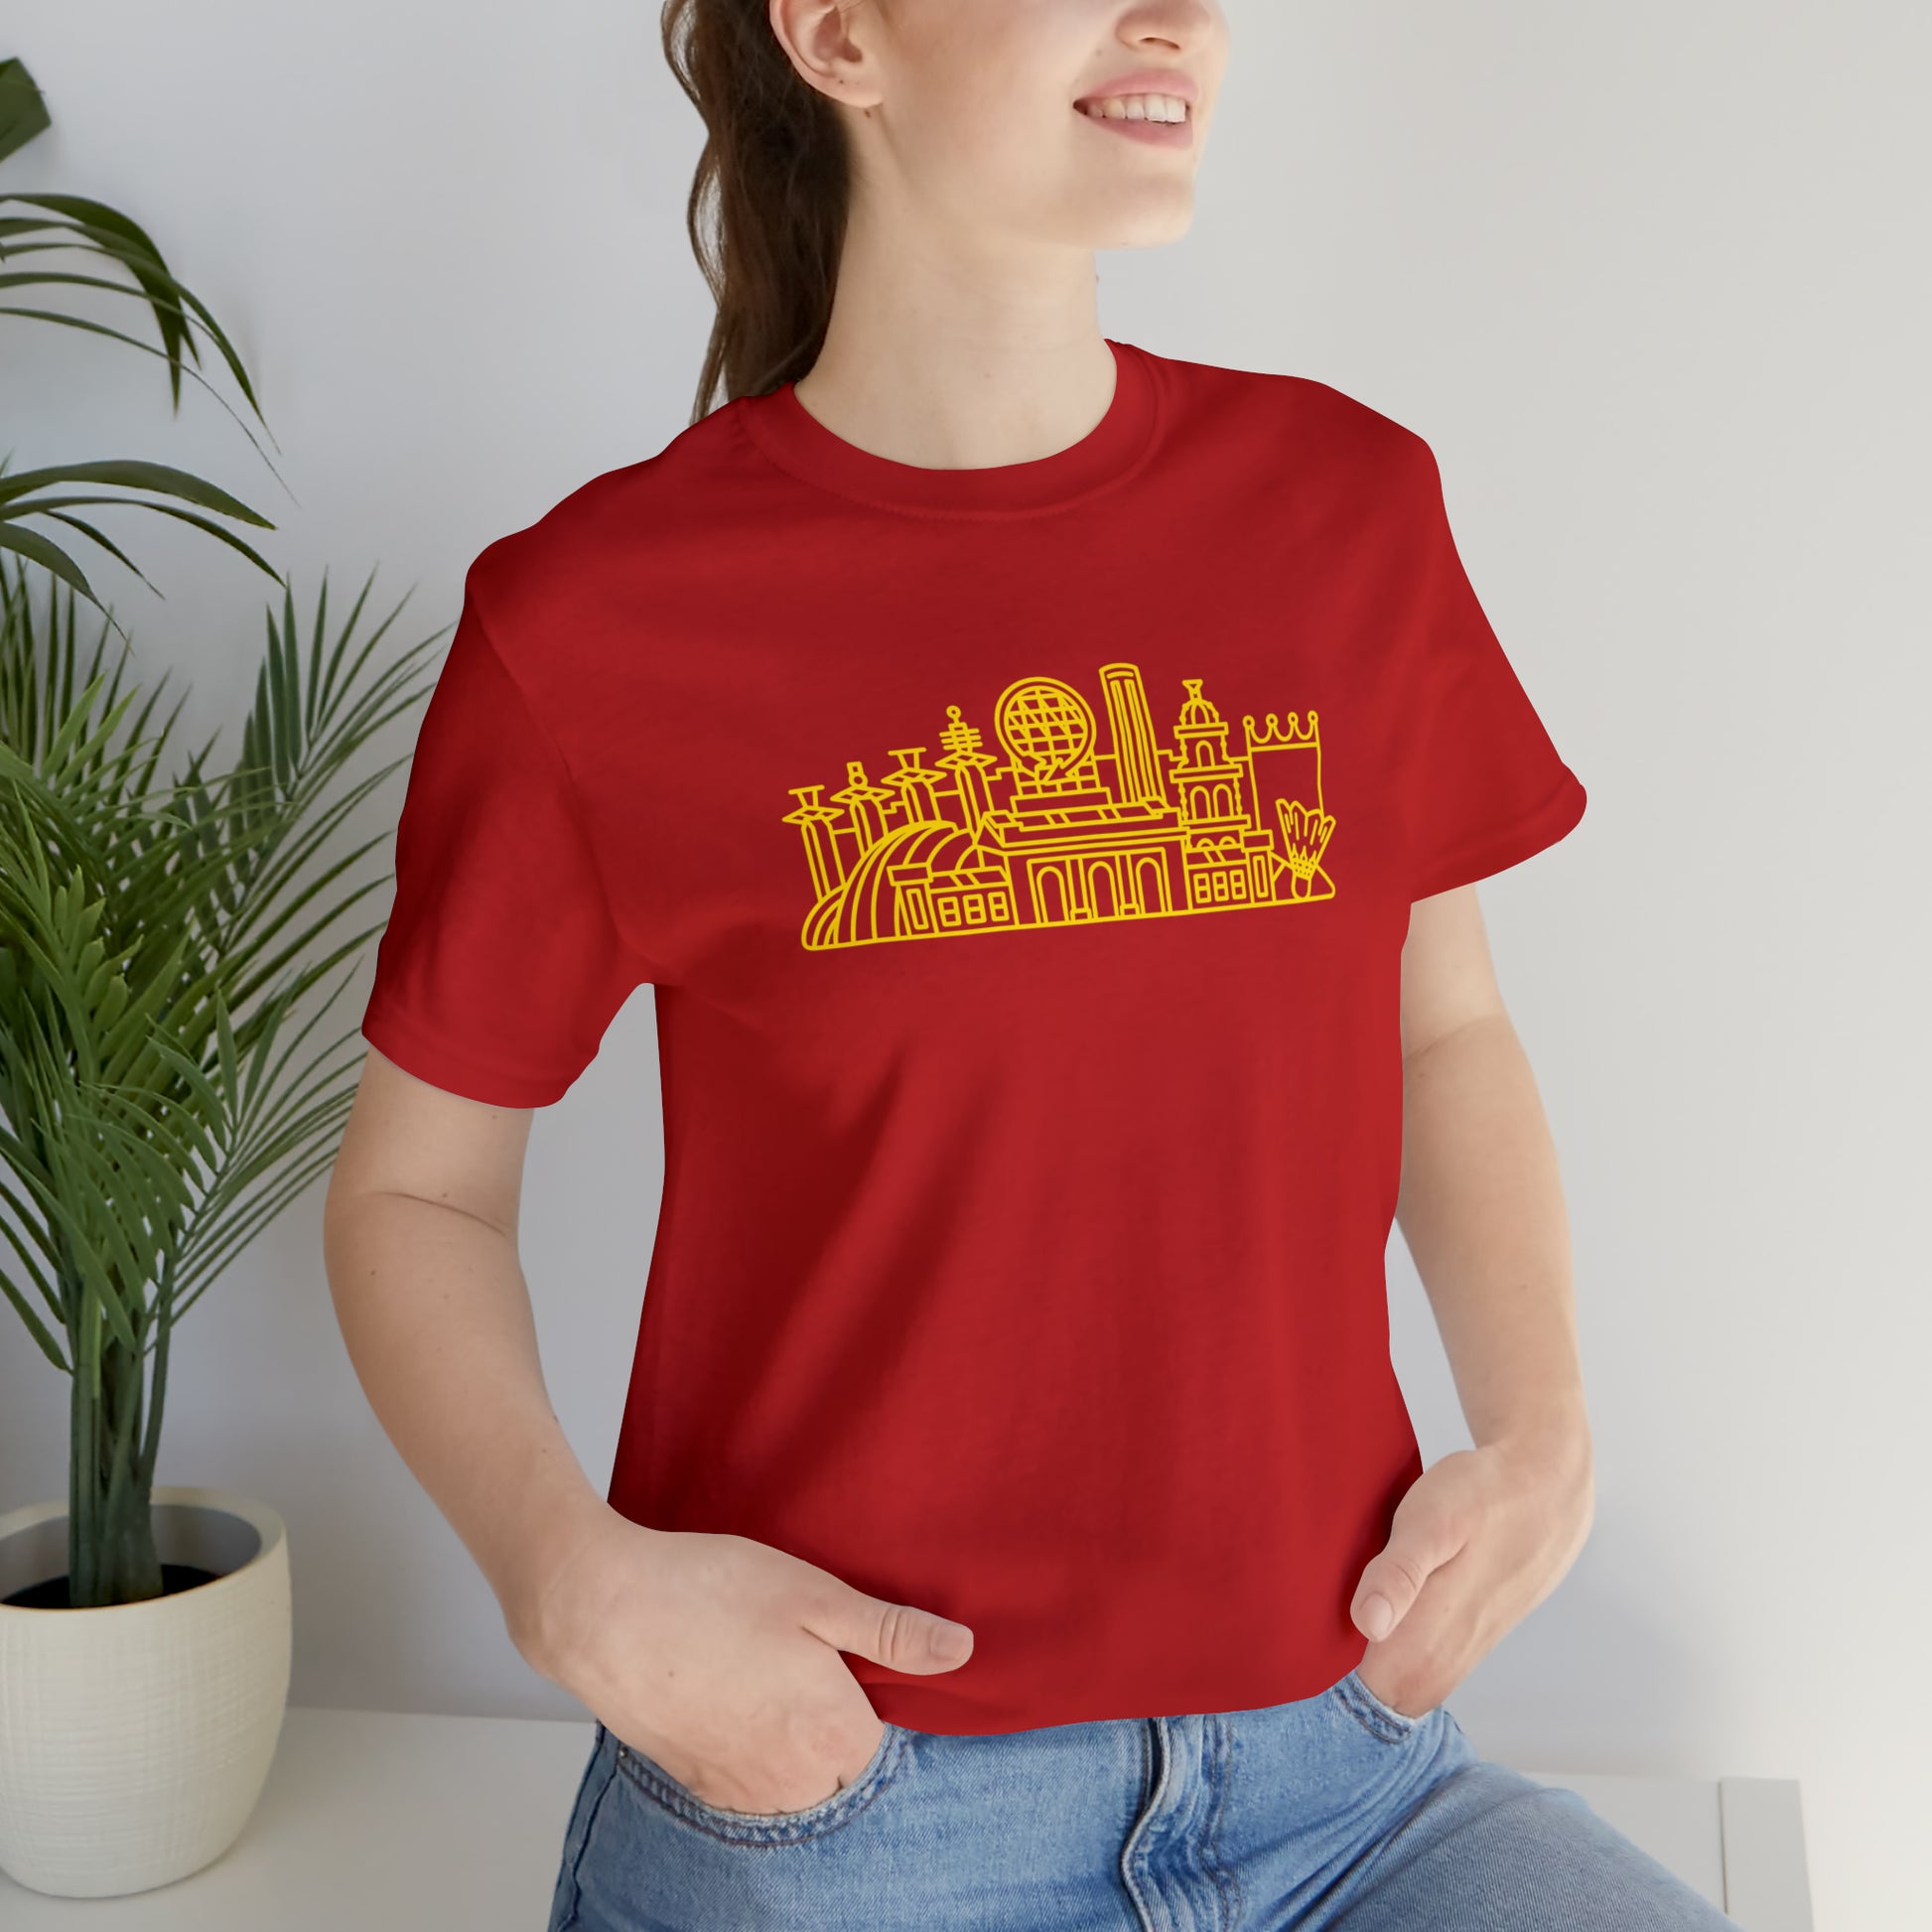 I Liked Kansas City Before It Was Cool Men/Unisex T-Shirt Kelly / S